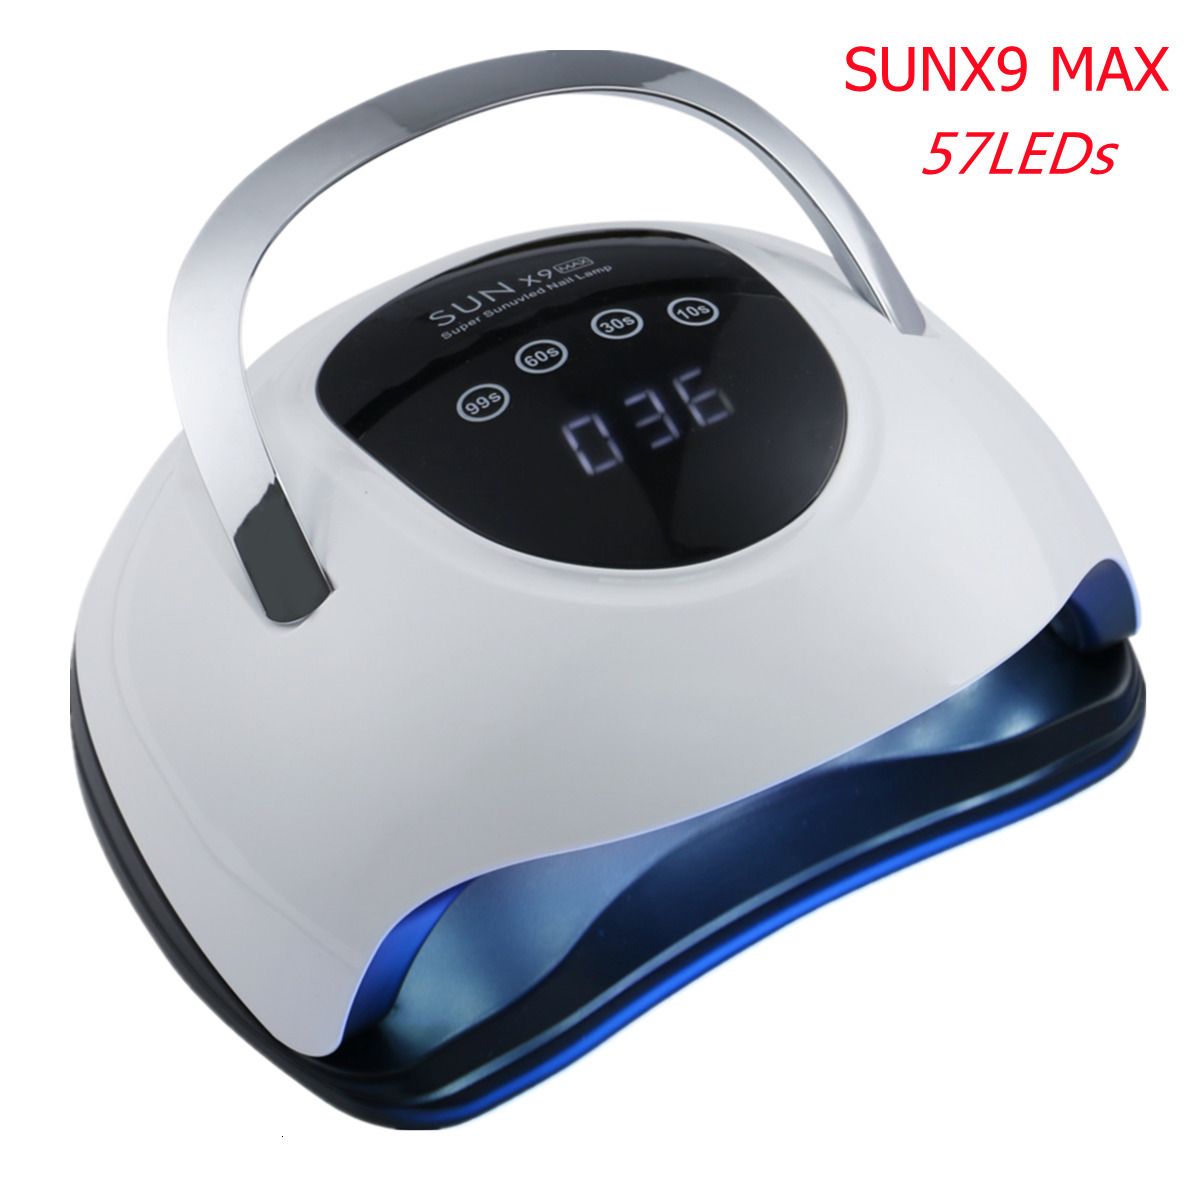 sunx9 max